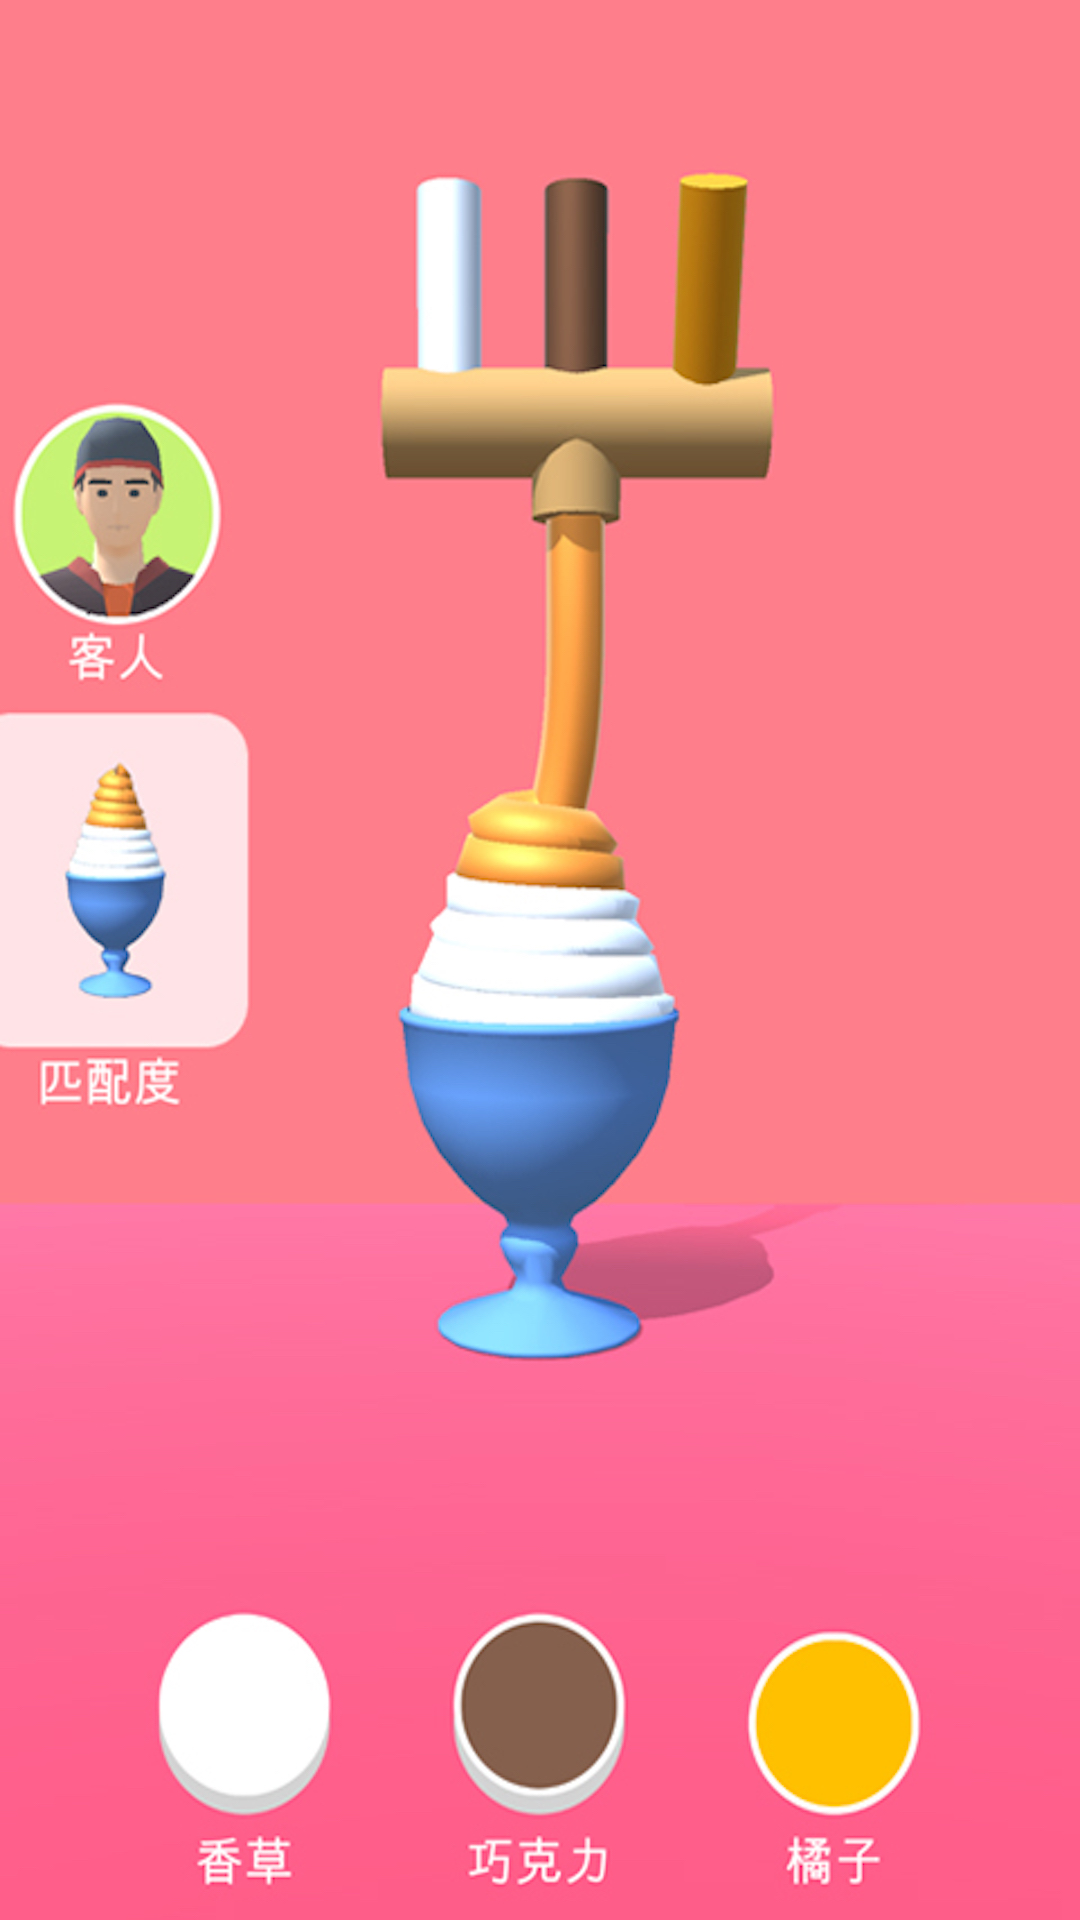 DIY冰淇淋游戏正版手机版下载 v1.00 安卓版 1